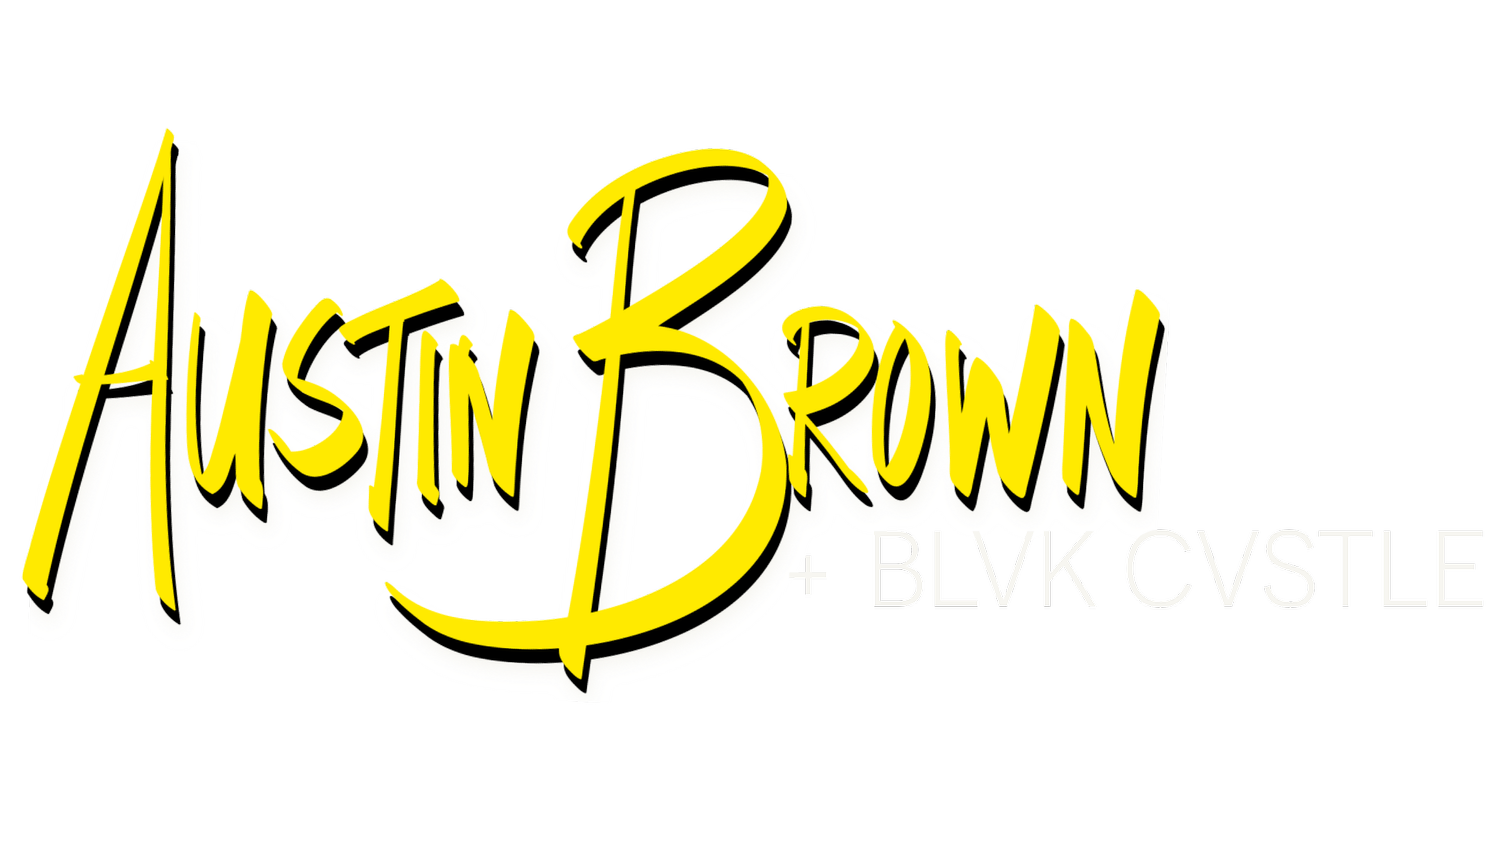 Austin Brown + BLVK CVSTLE